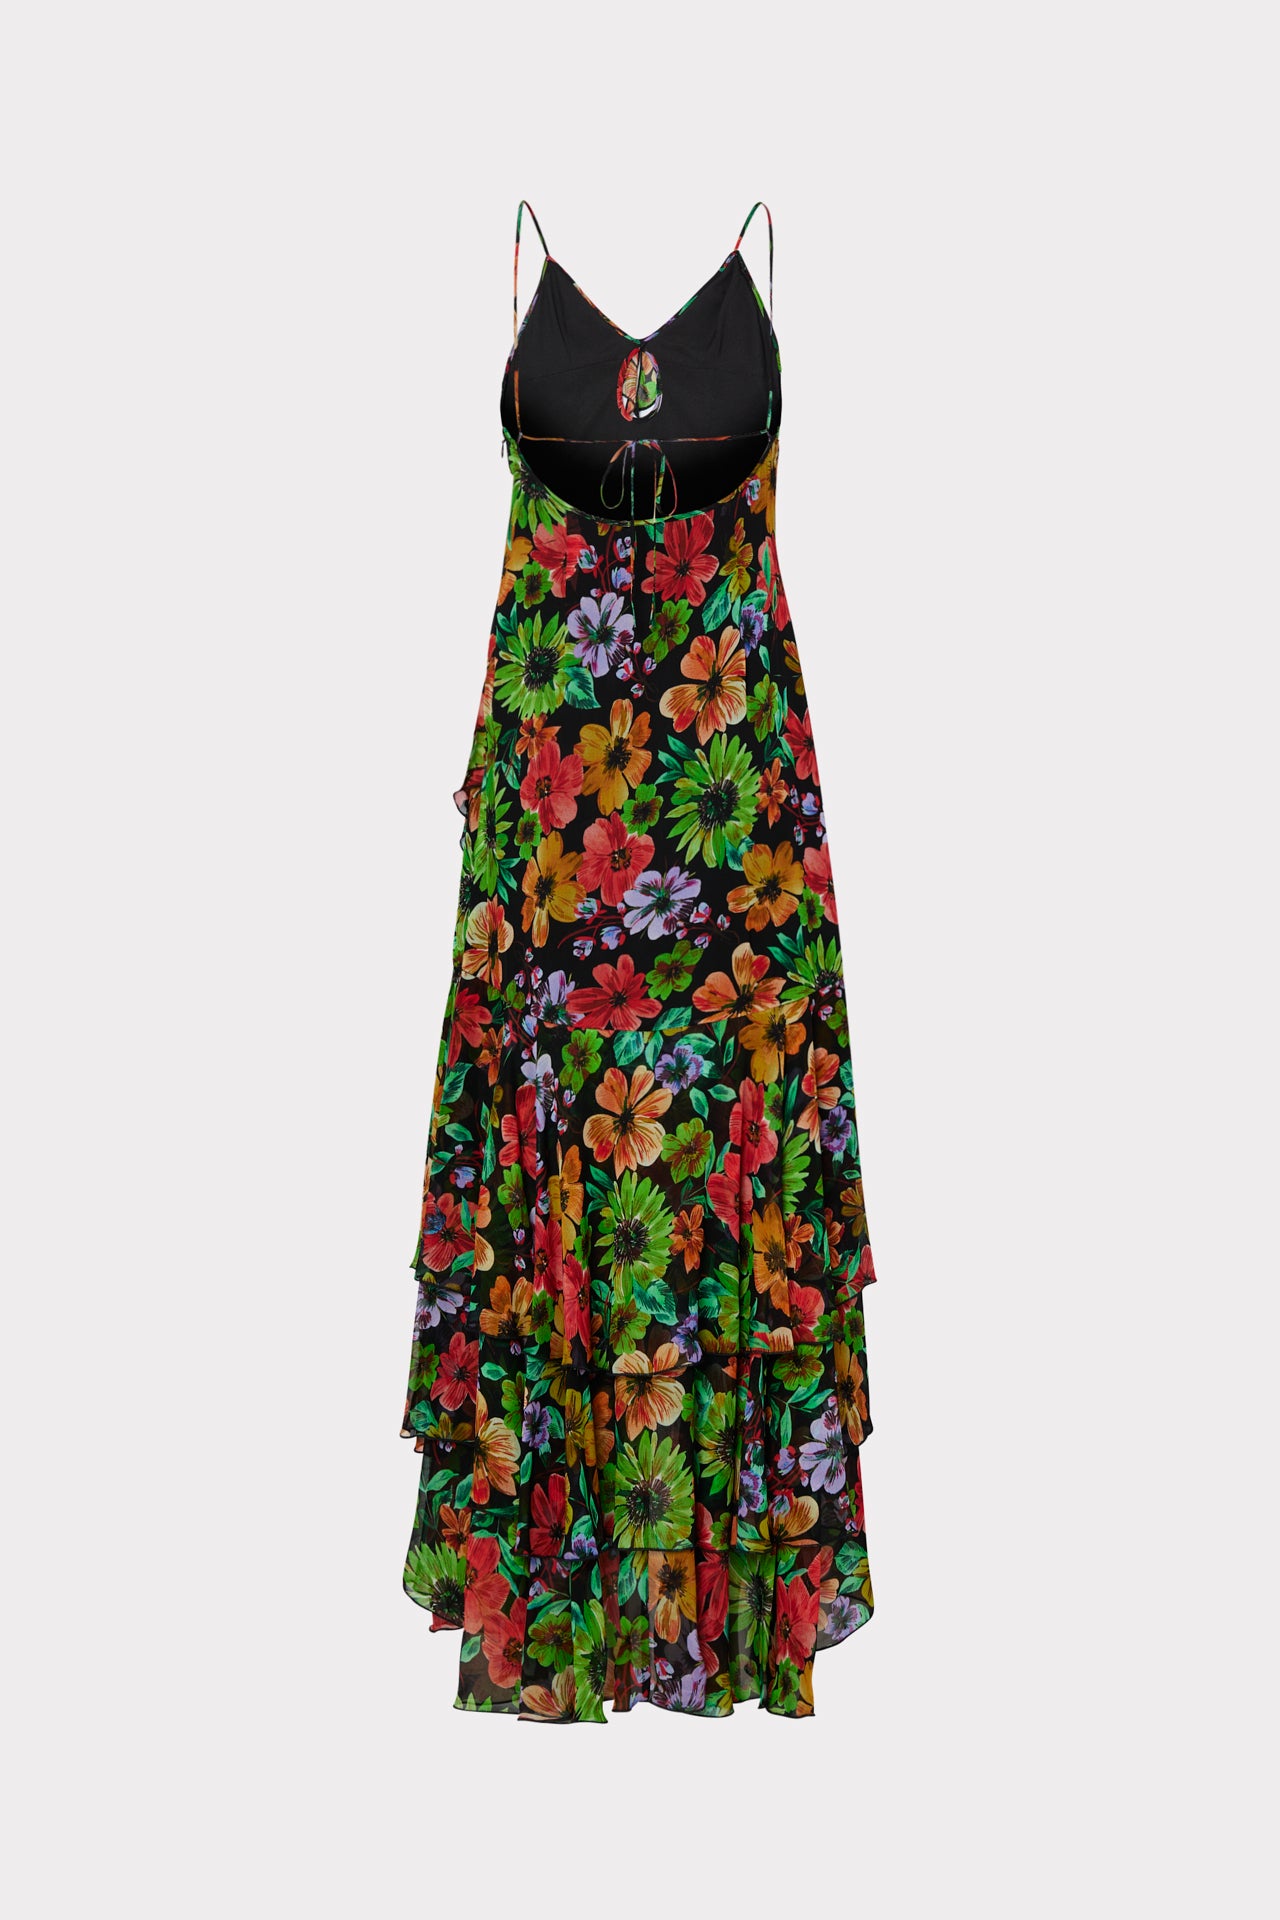 Edra Wildflower Garden Print Dress